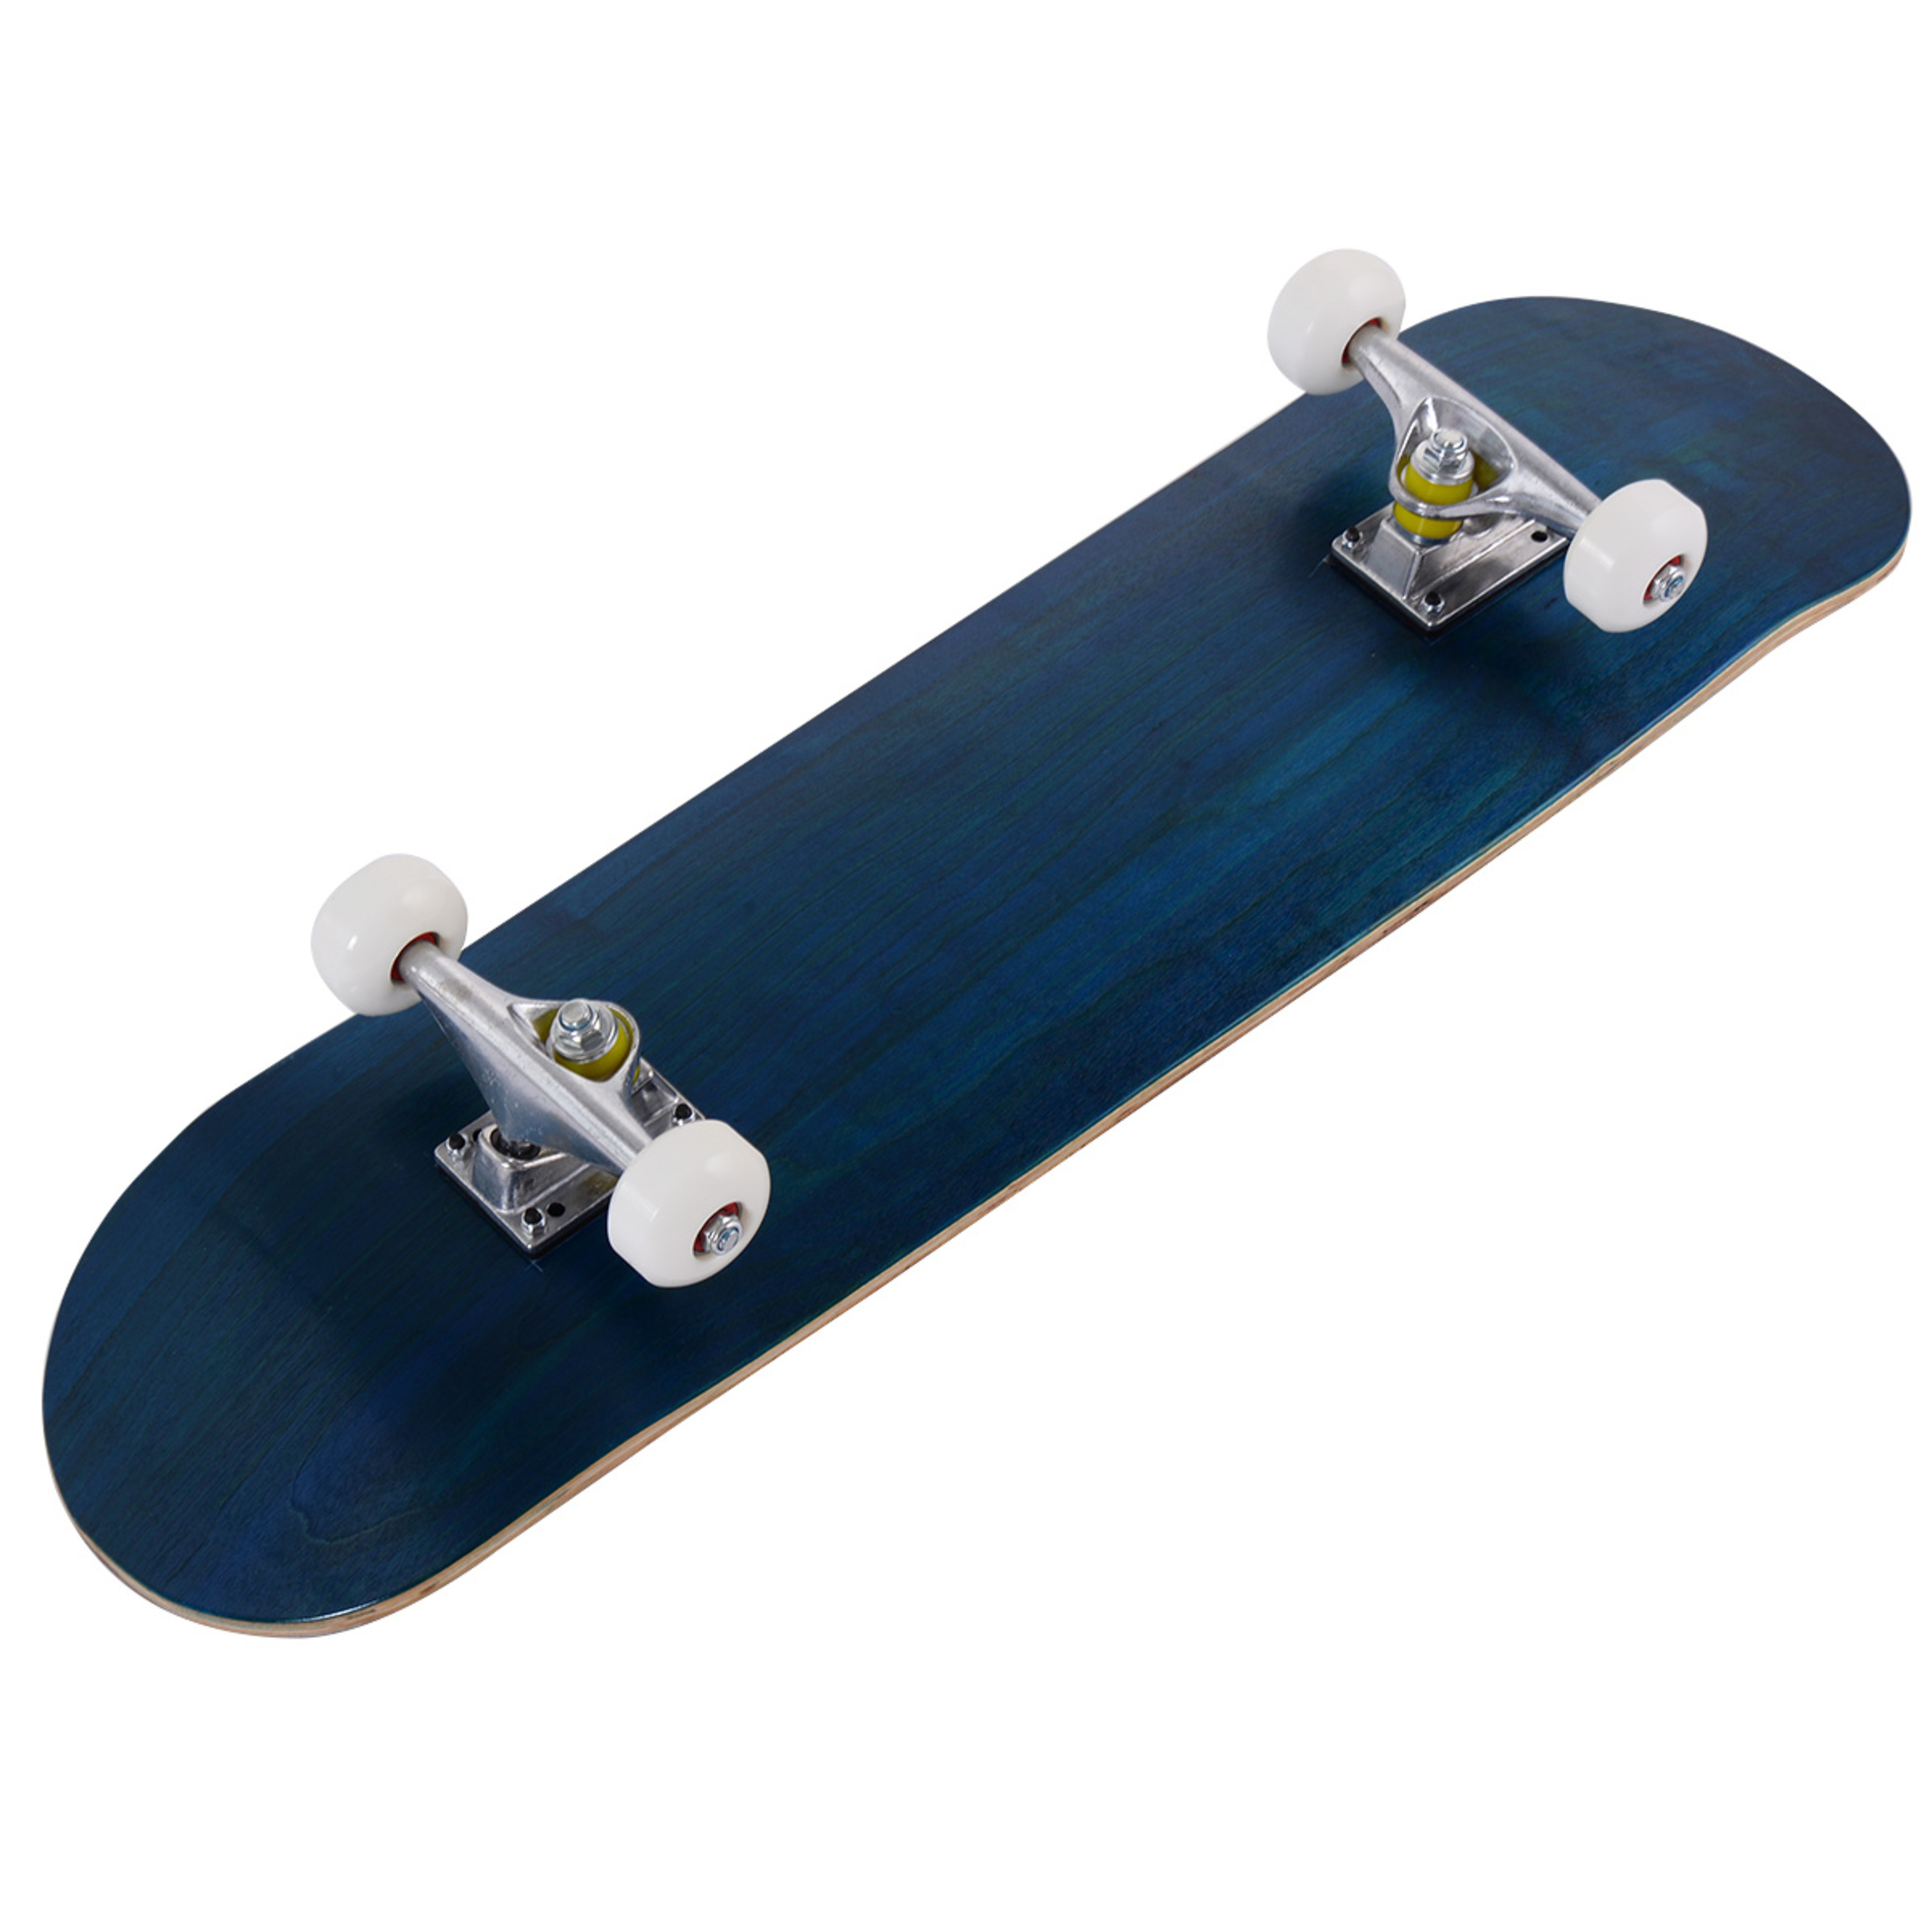 Monopatín Skateboards 79 X 20 Cm Con 4 Pu Ruedas Costway - Azul Oscuro/Negro  MKP